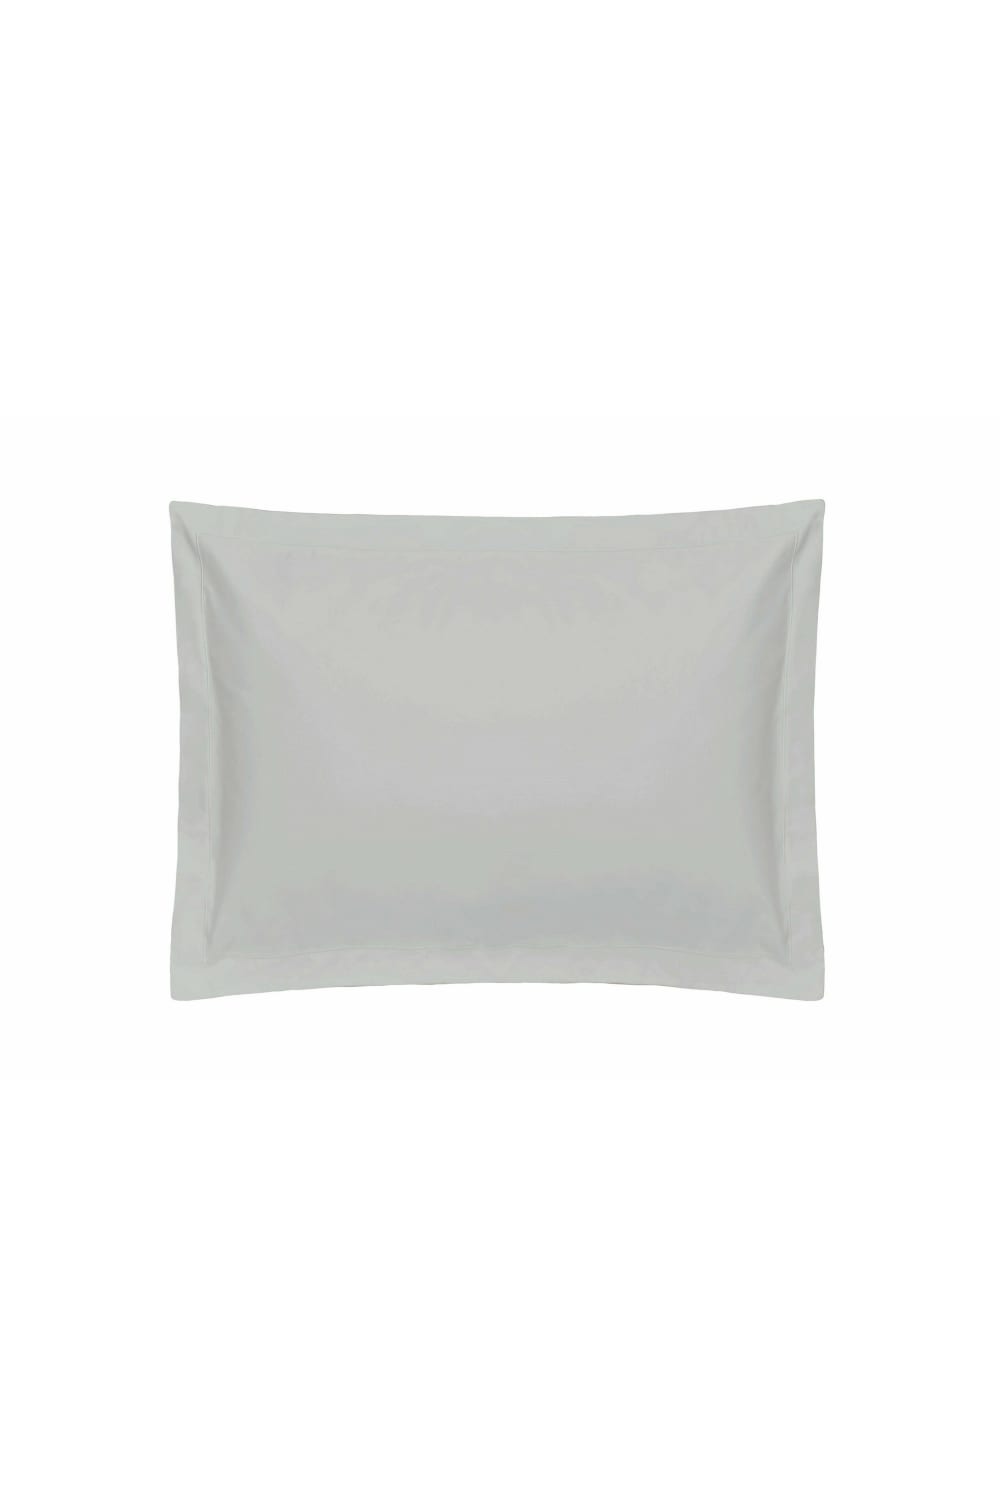 Belledorm Premium Blend 500 Thread Count Oxford Pillowcase (Platinum) (One Size)